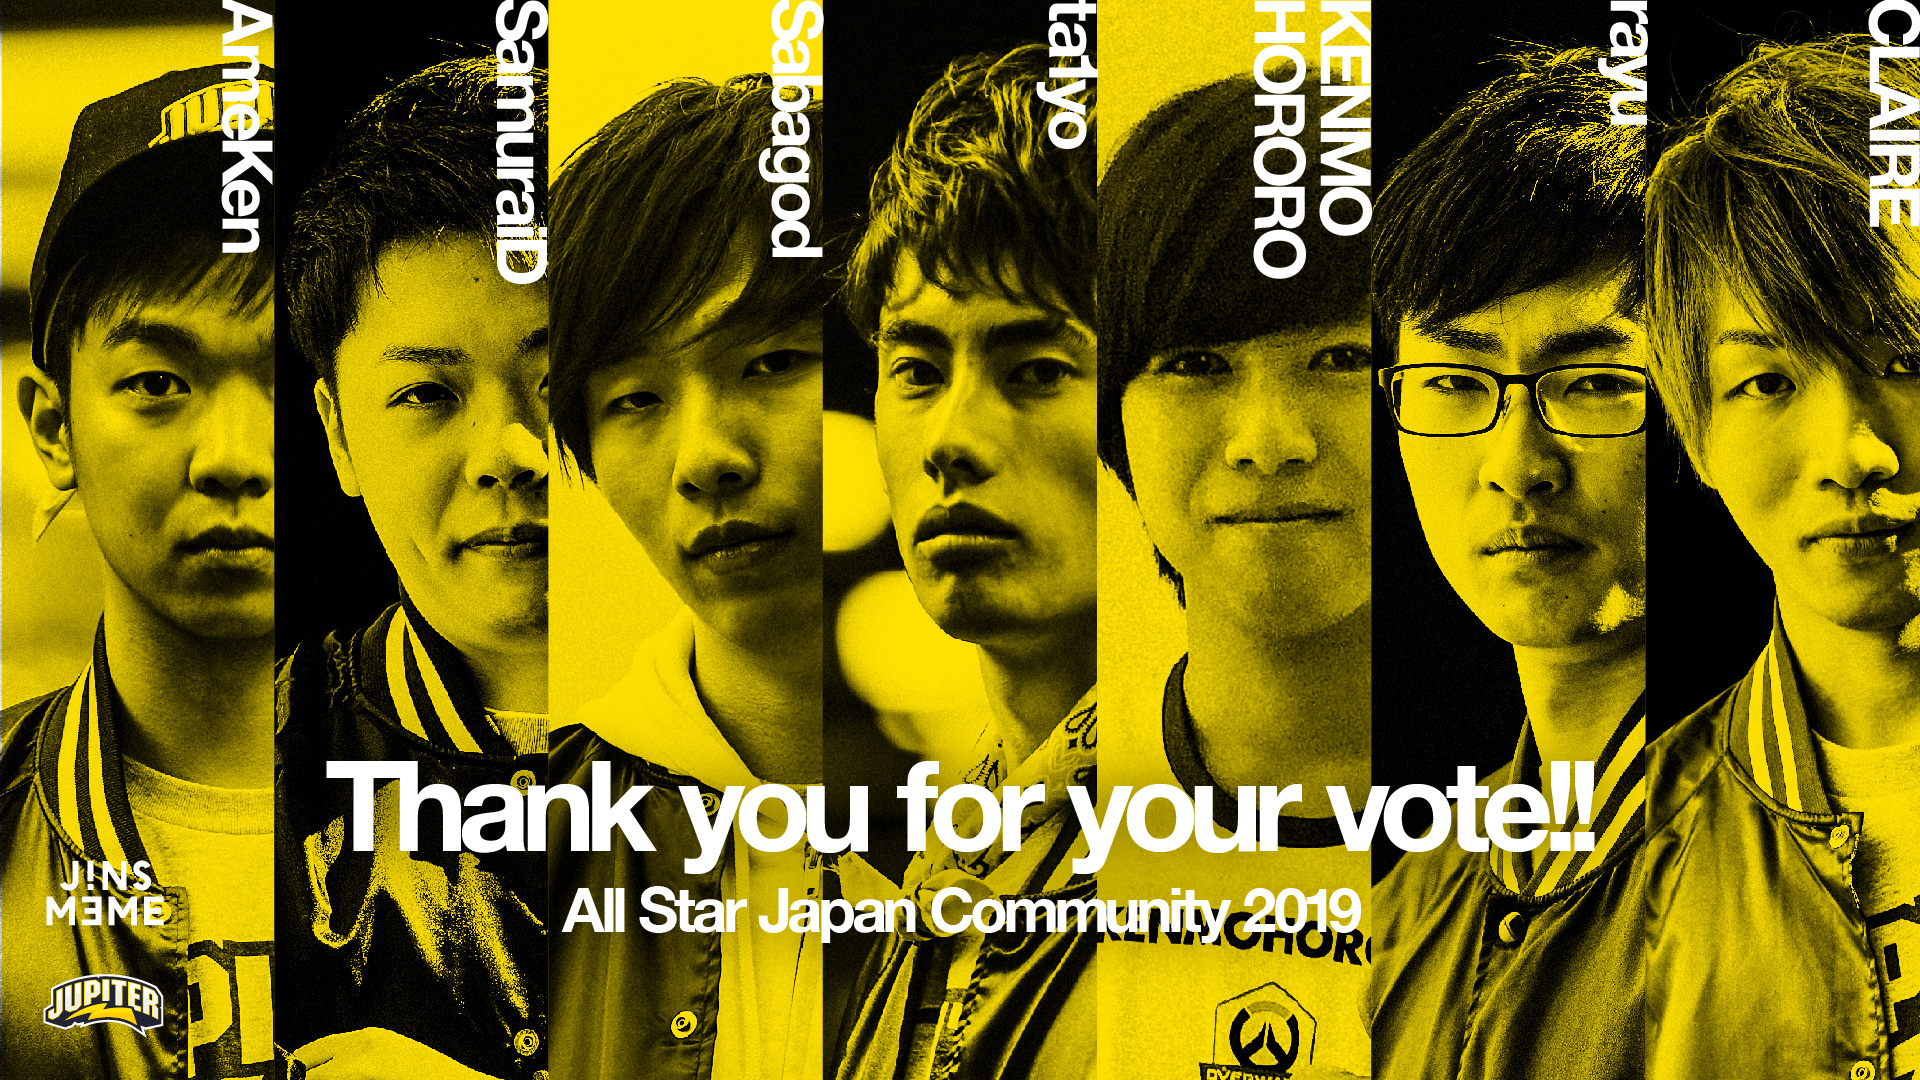 Overwatch – ALL STAR JAPAN COMMUNITYへの投票ありがとうございました。